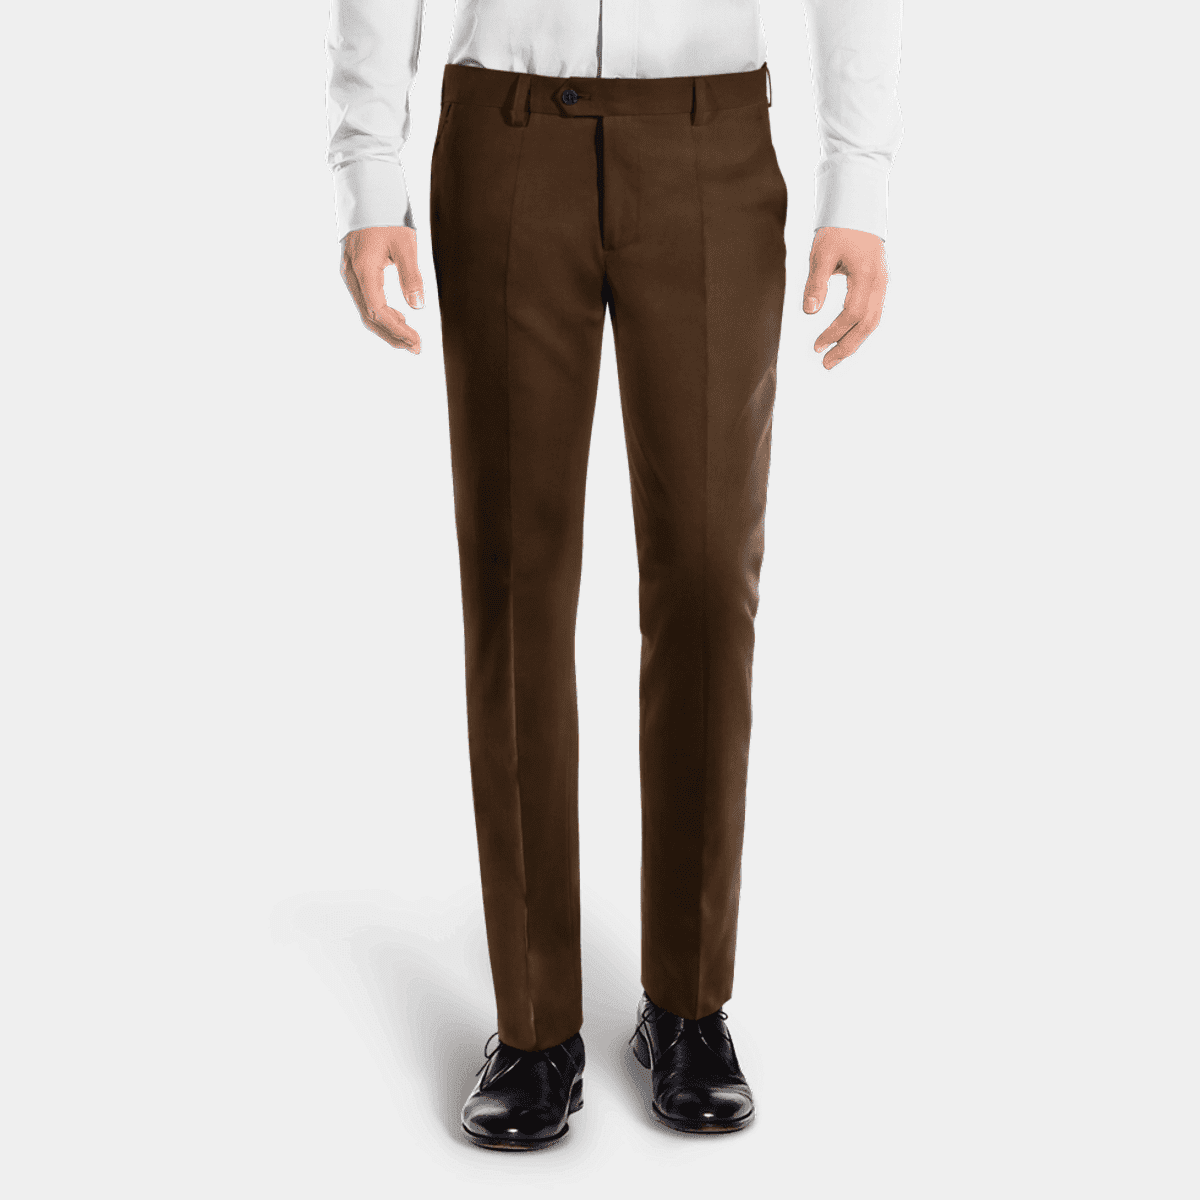 Chocolate Brown Velvet Pant Suit